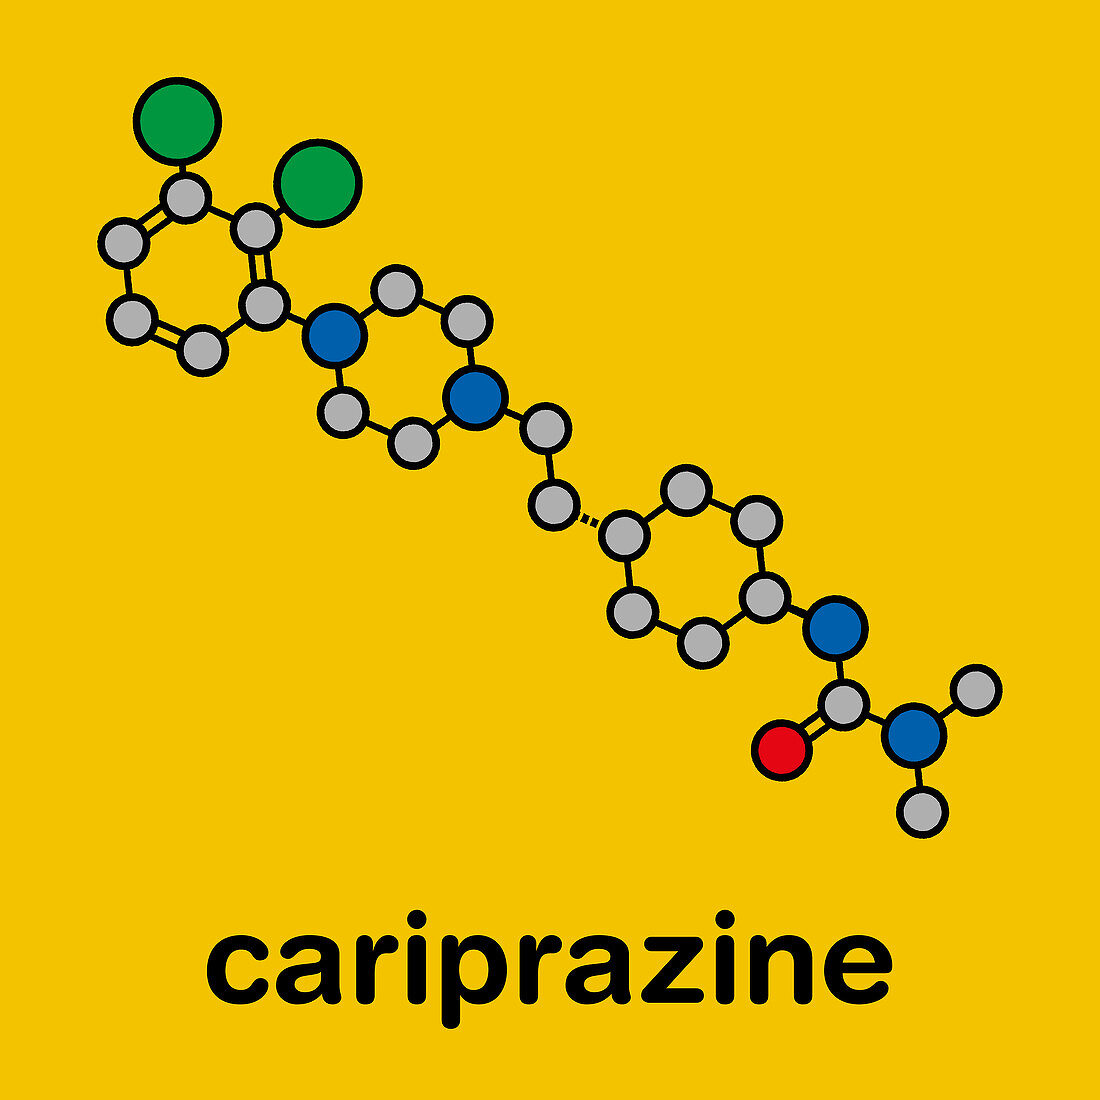 Cariprazine antipsychotic drug molecule, illustration